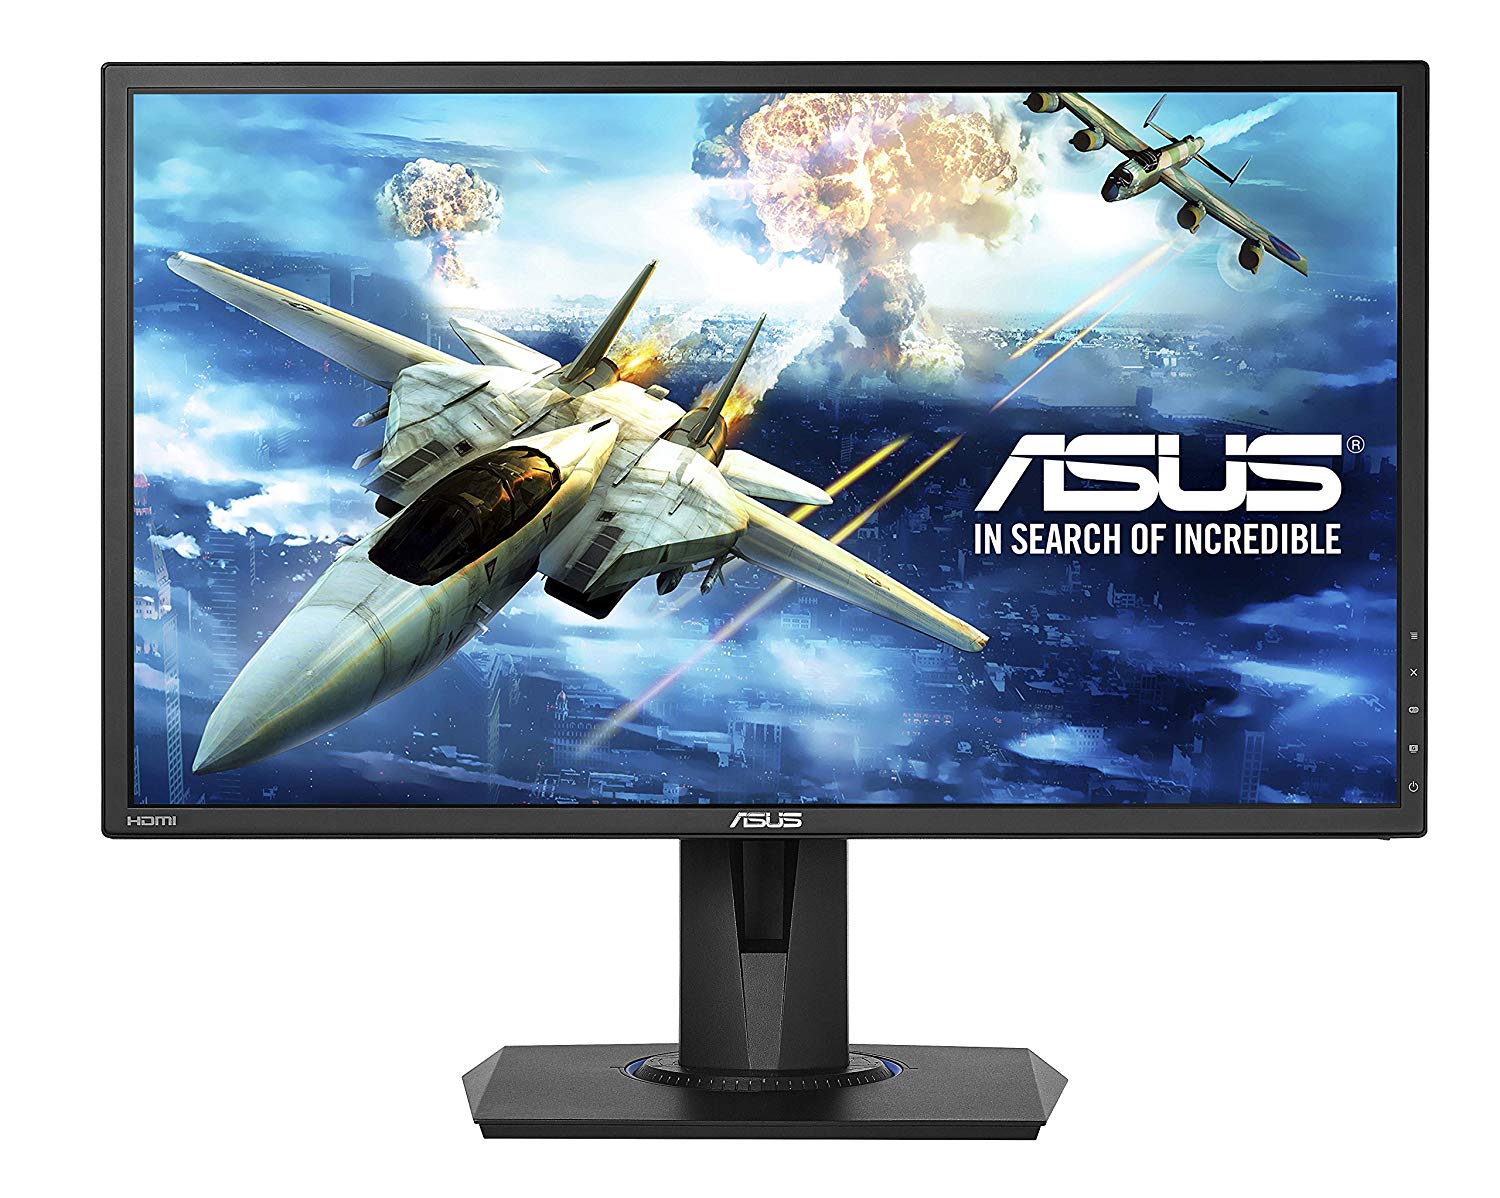 ASUS VG245H 24â€� Full HD 1080p gaming monitor